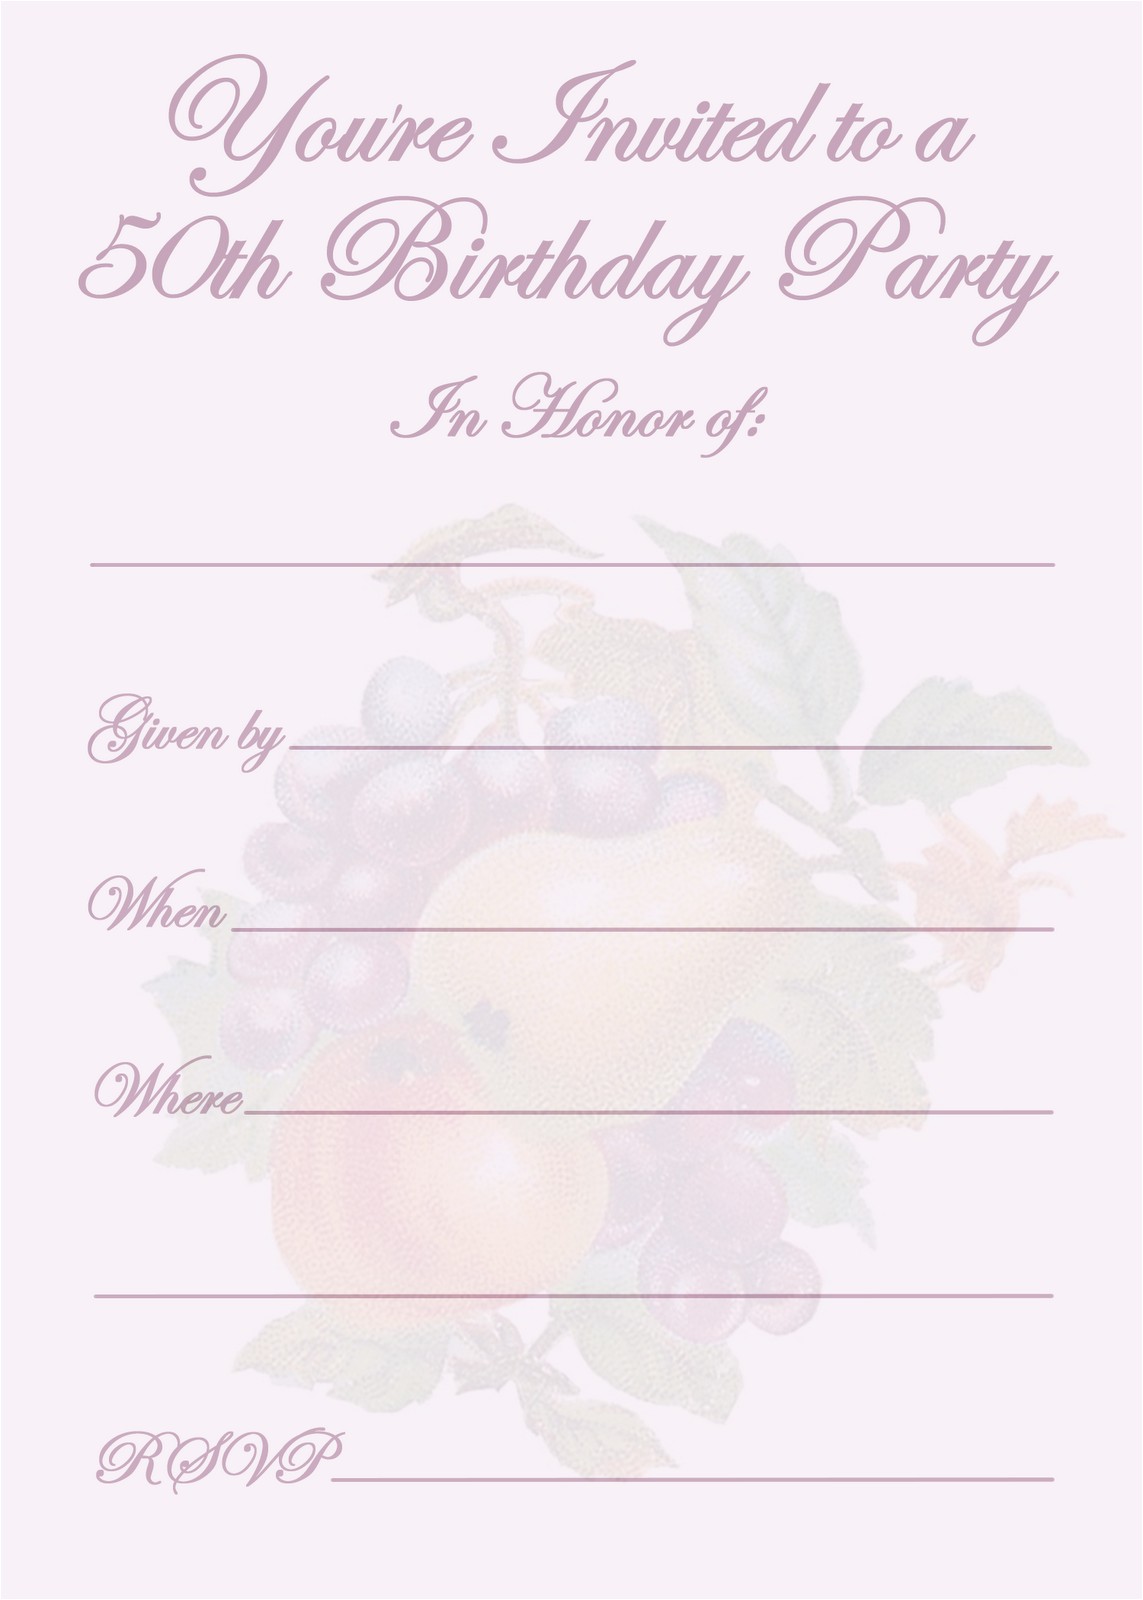 50th birthday party invitation templates